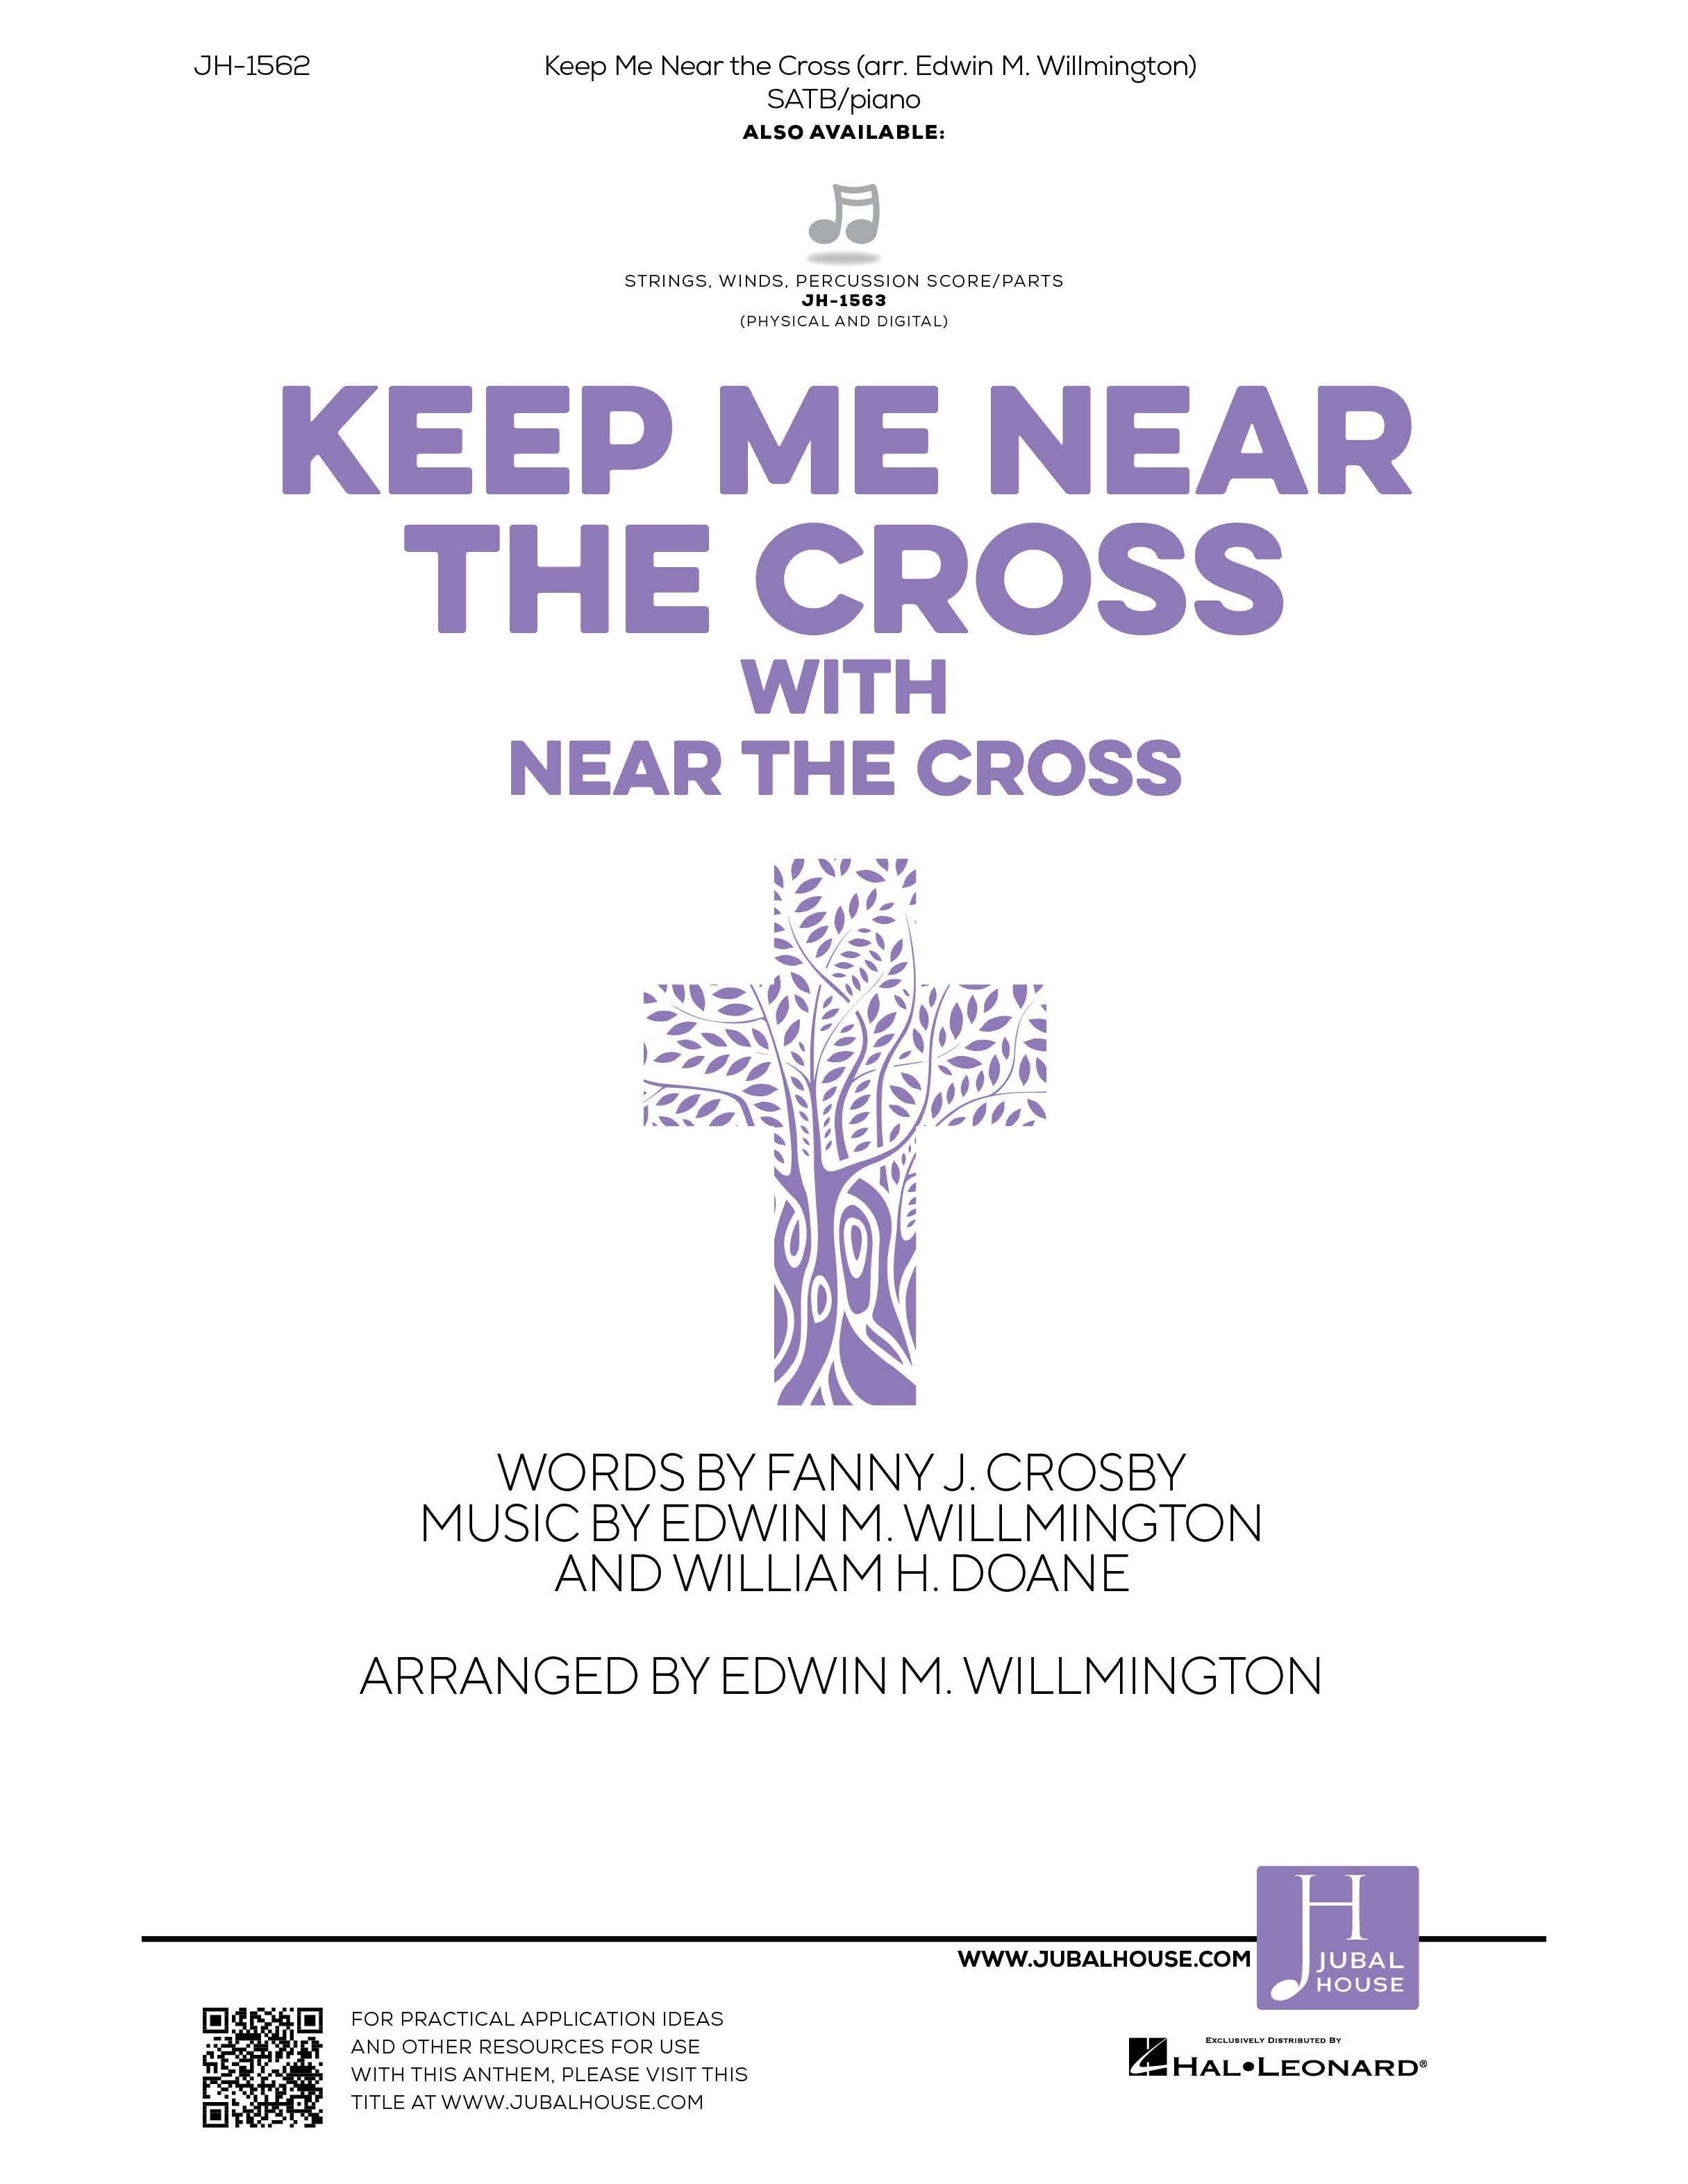 Keep Me Near the Cross